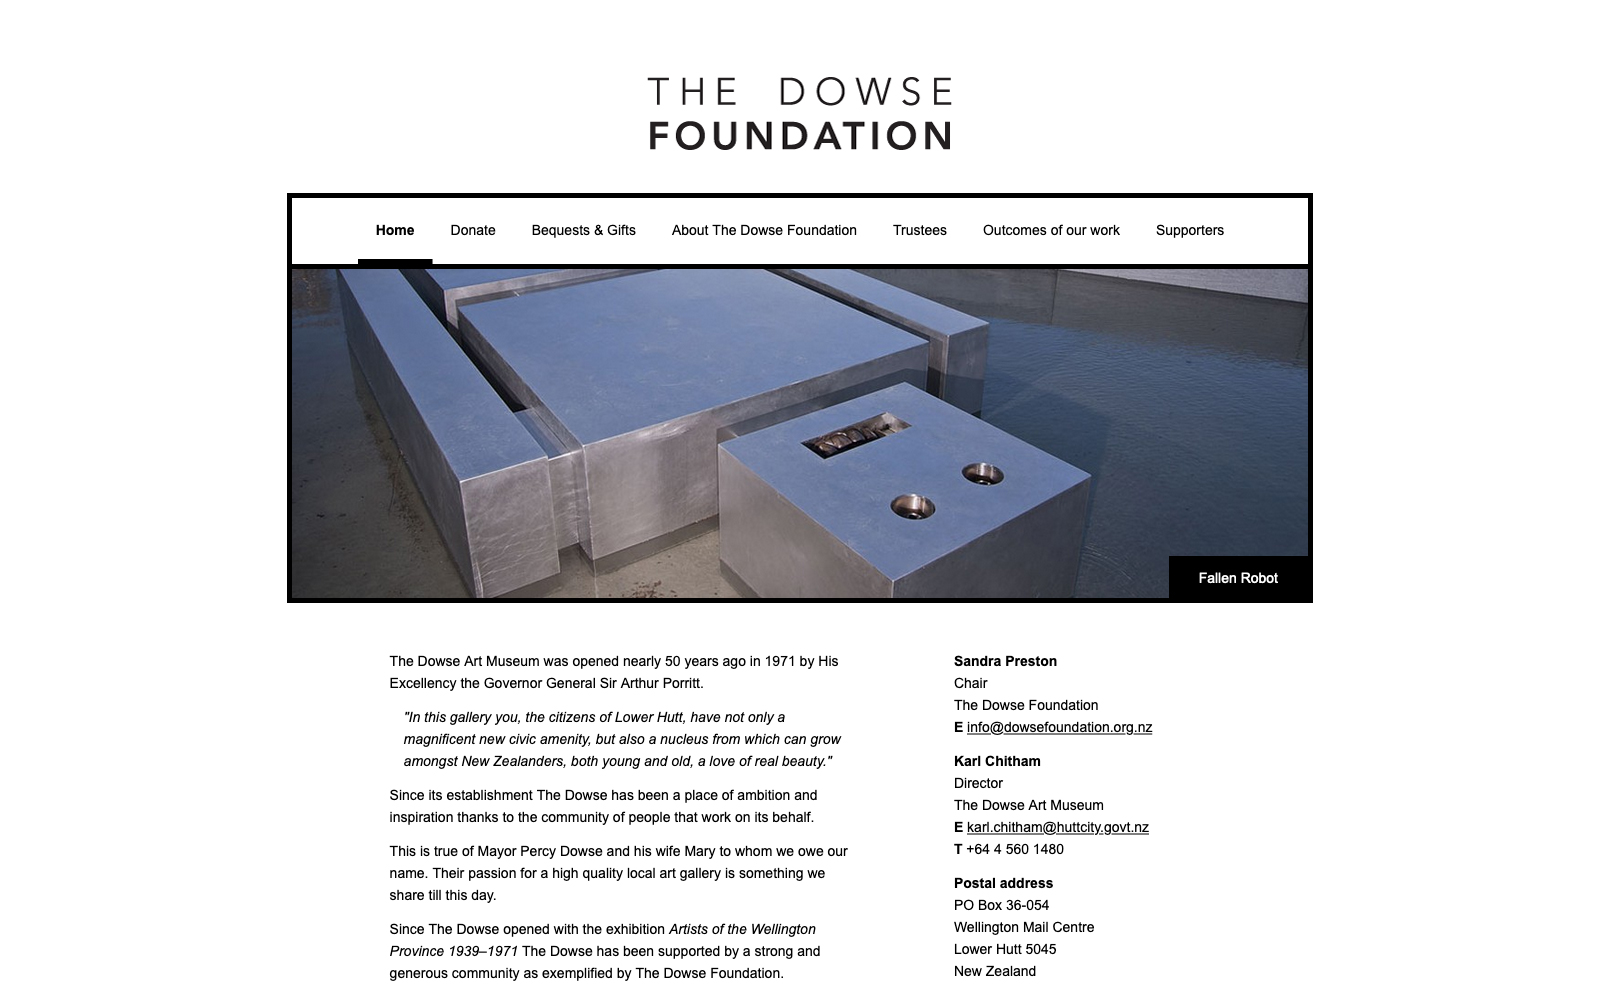 The Dowse Foundation